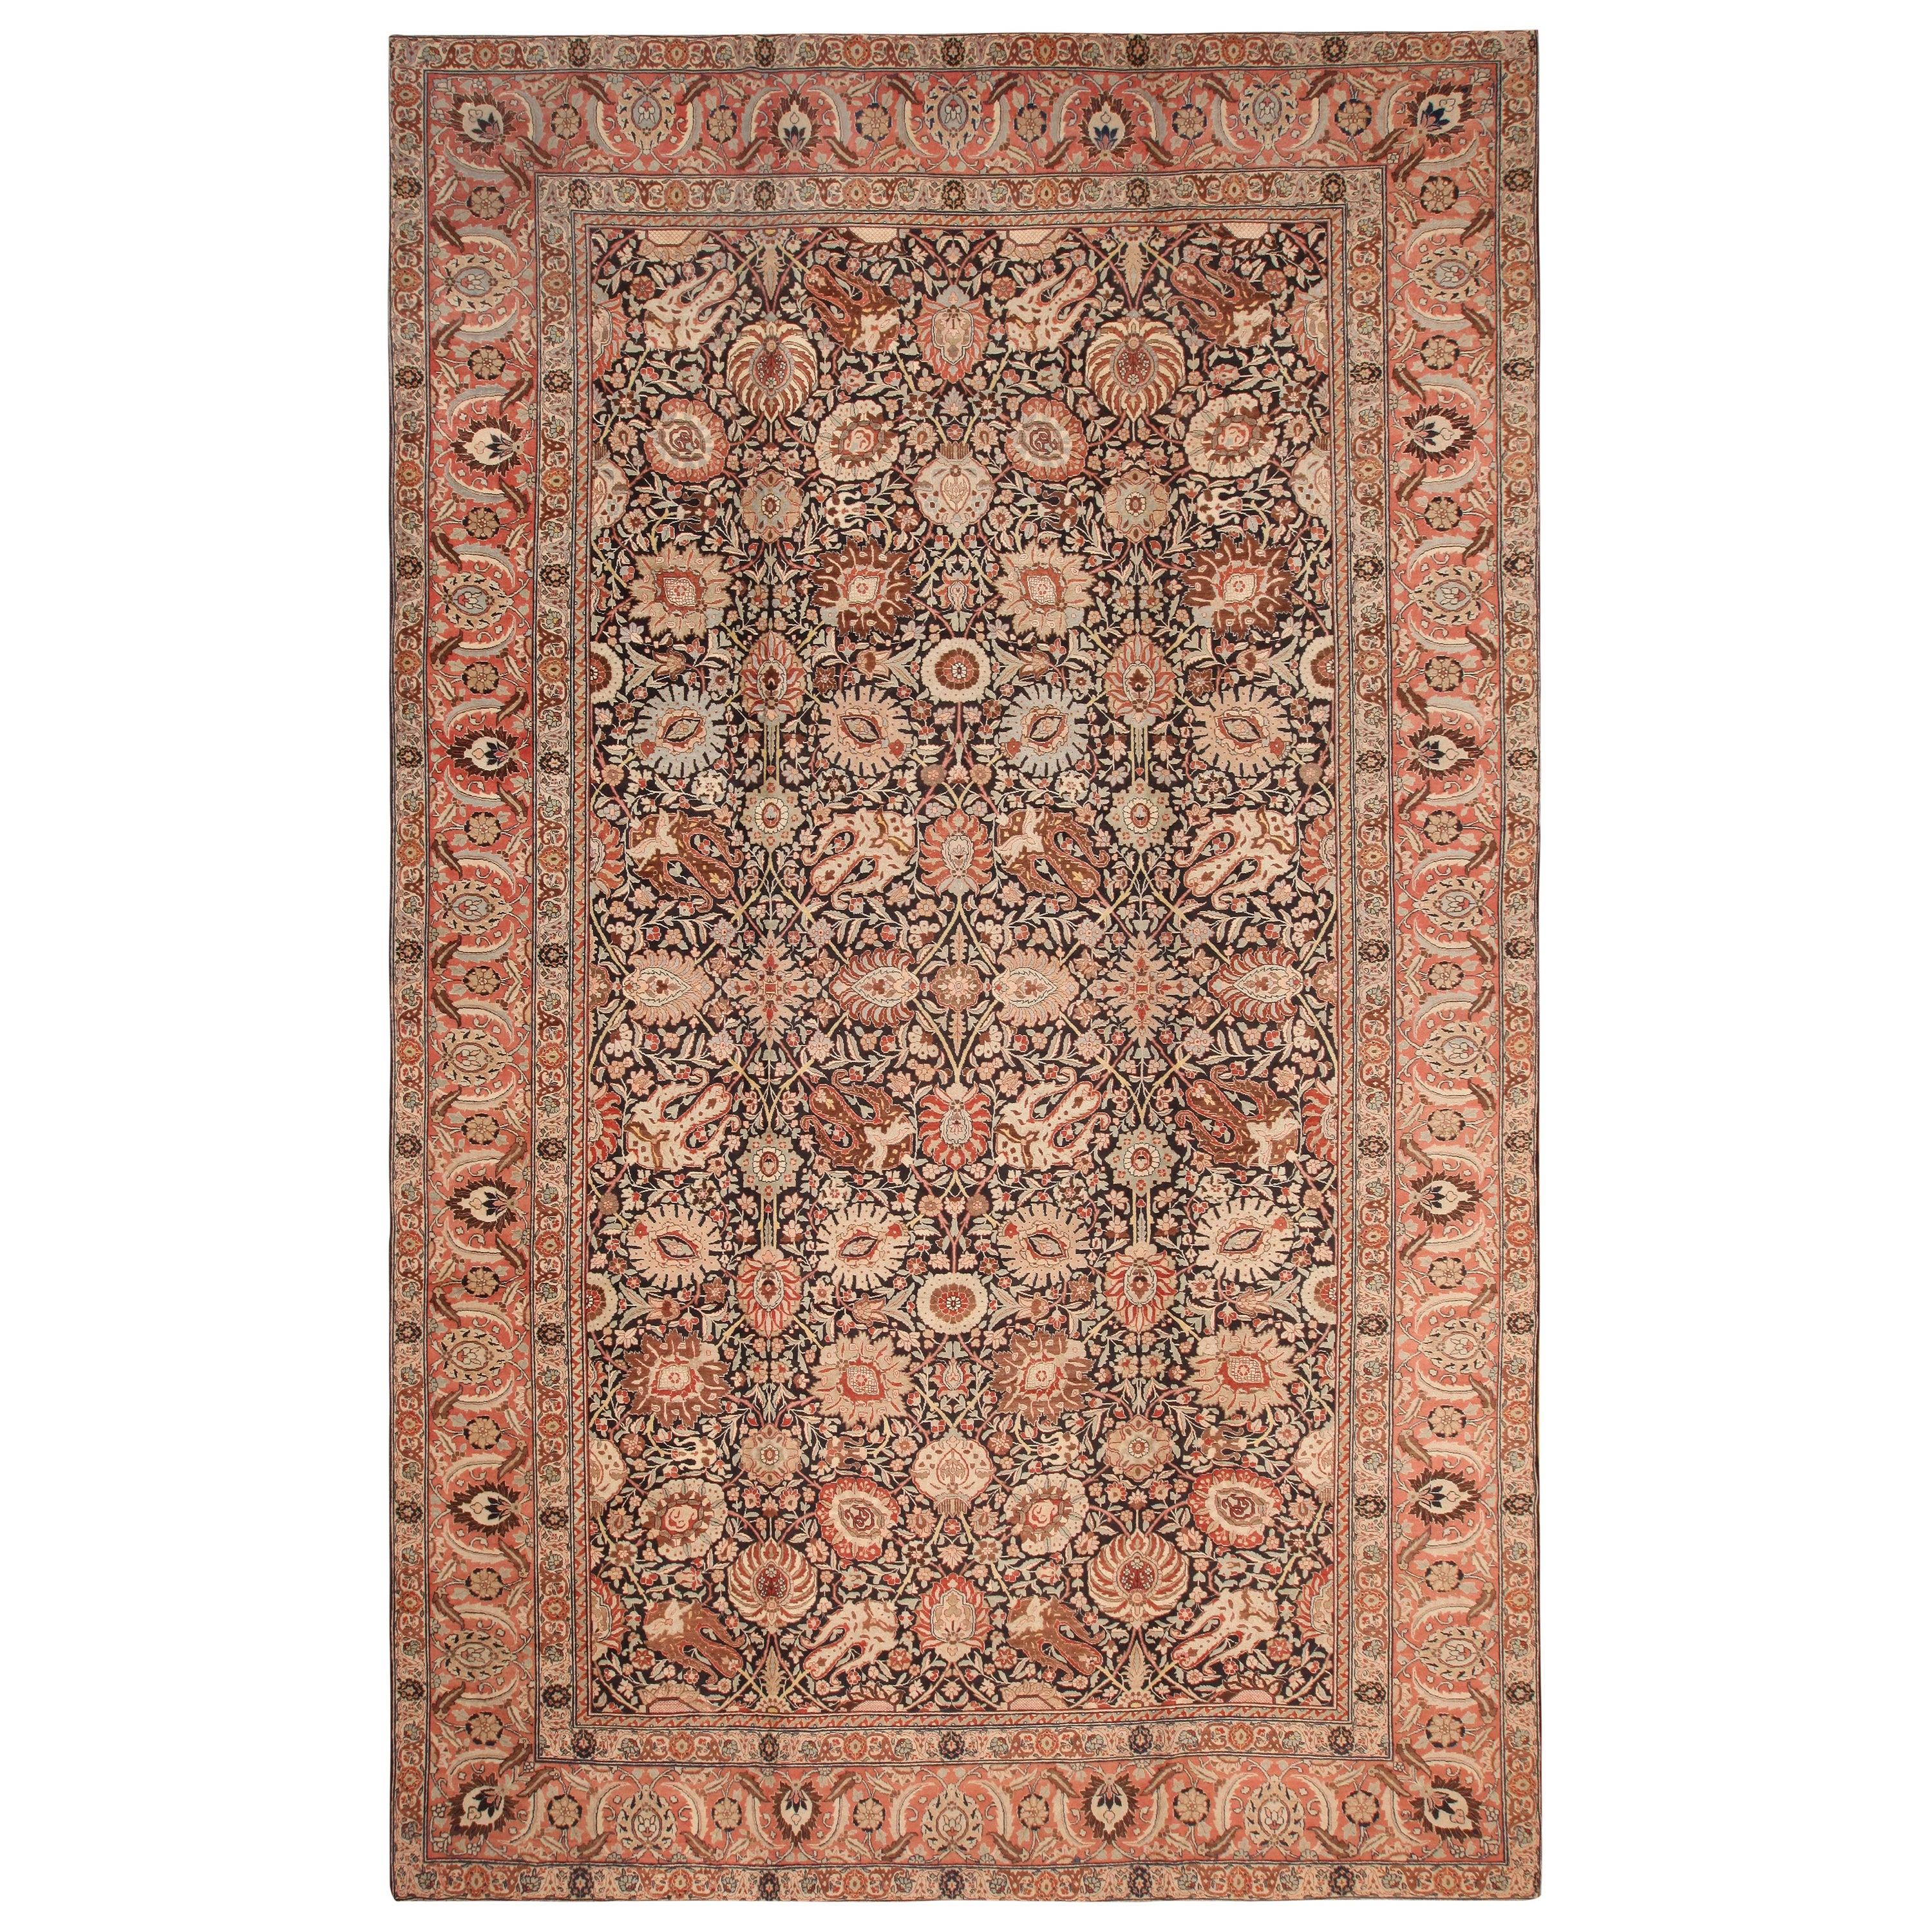 Antique Persian Tabriz Carpet. 12 ft 9 in x 20 ft 3 in